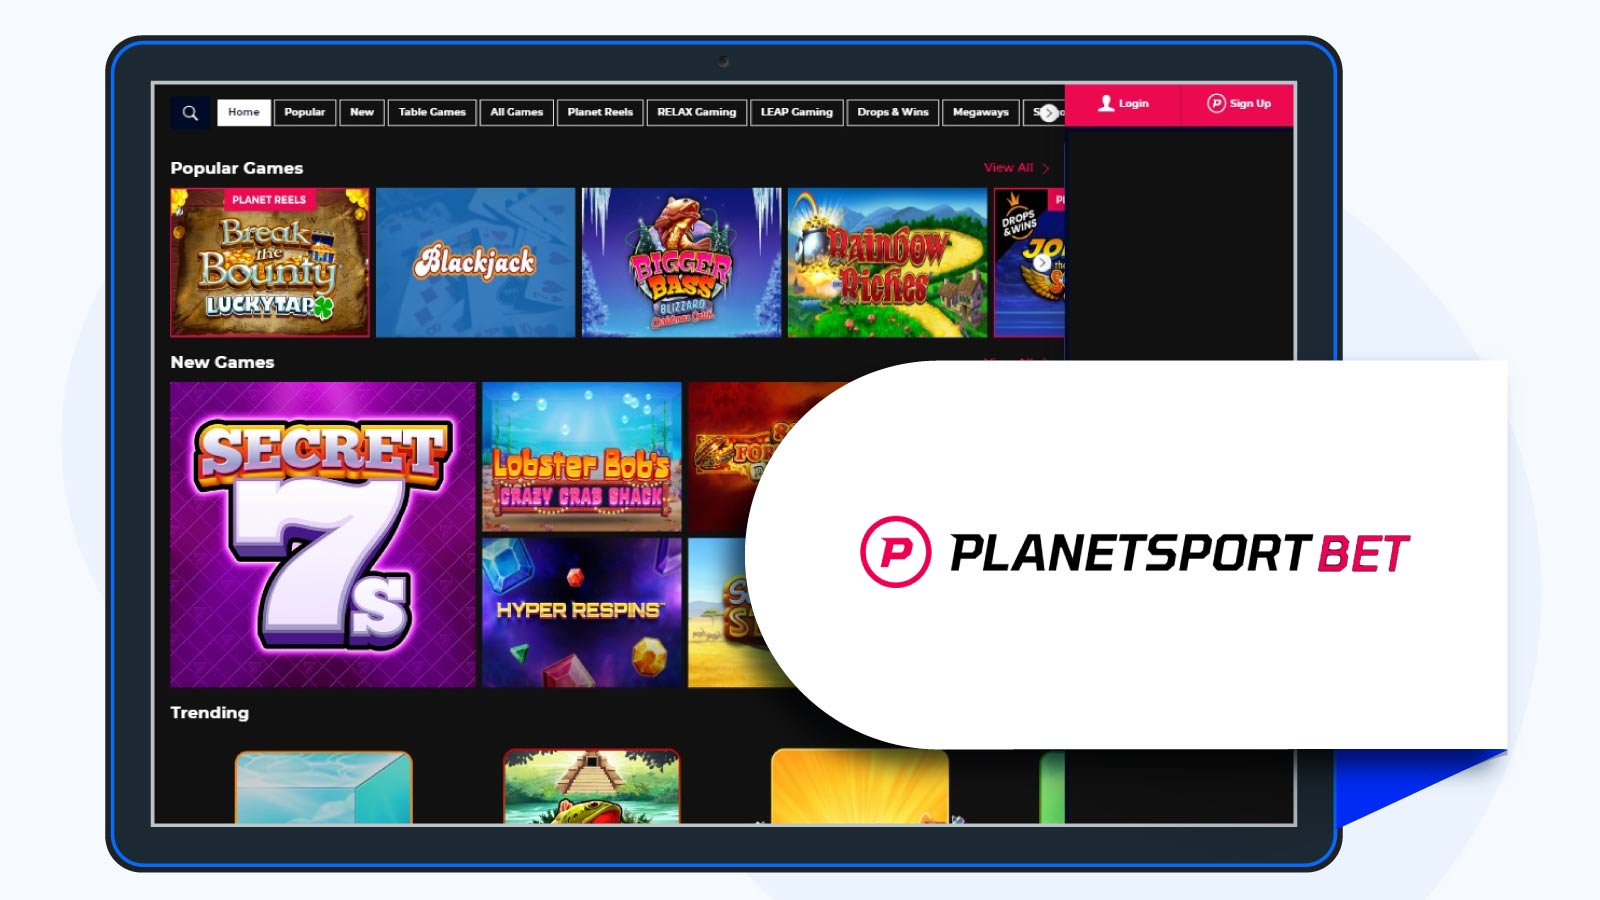 Planet-Sport-Bet-Casino Visa-Online-Casino-Review